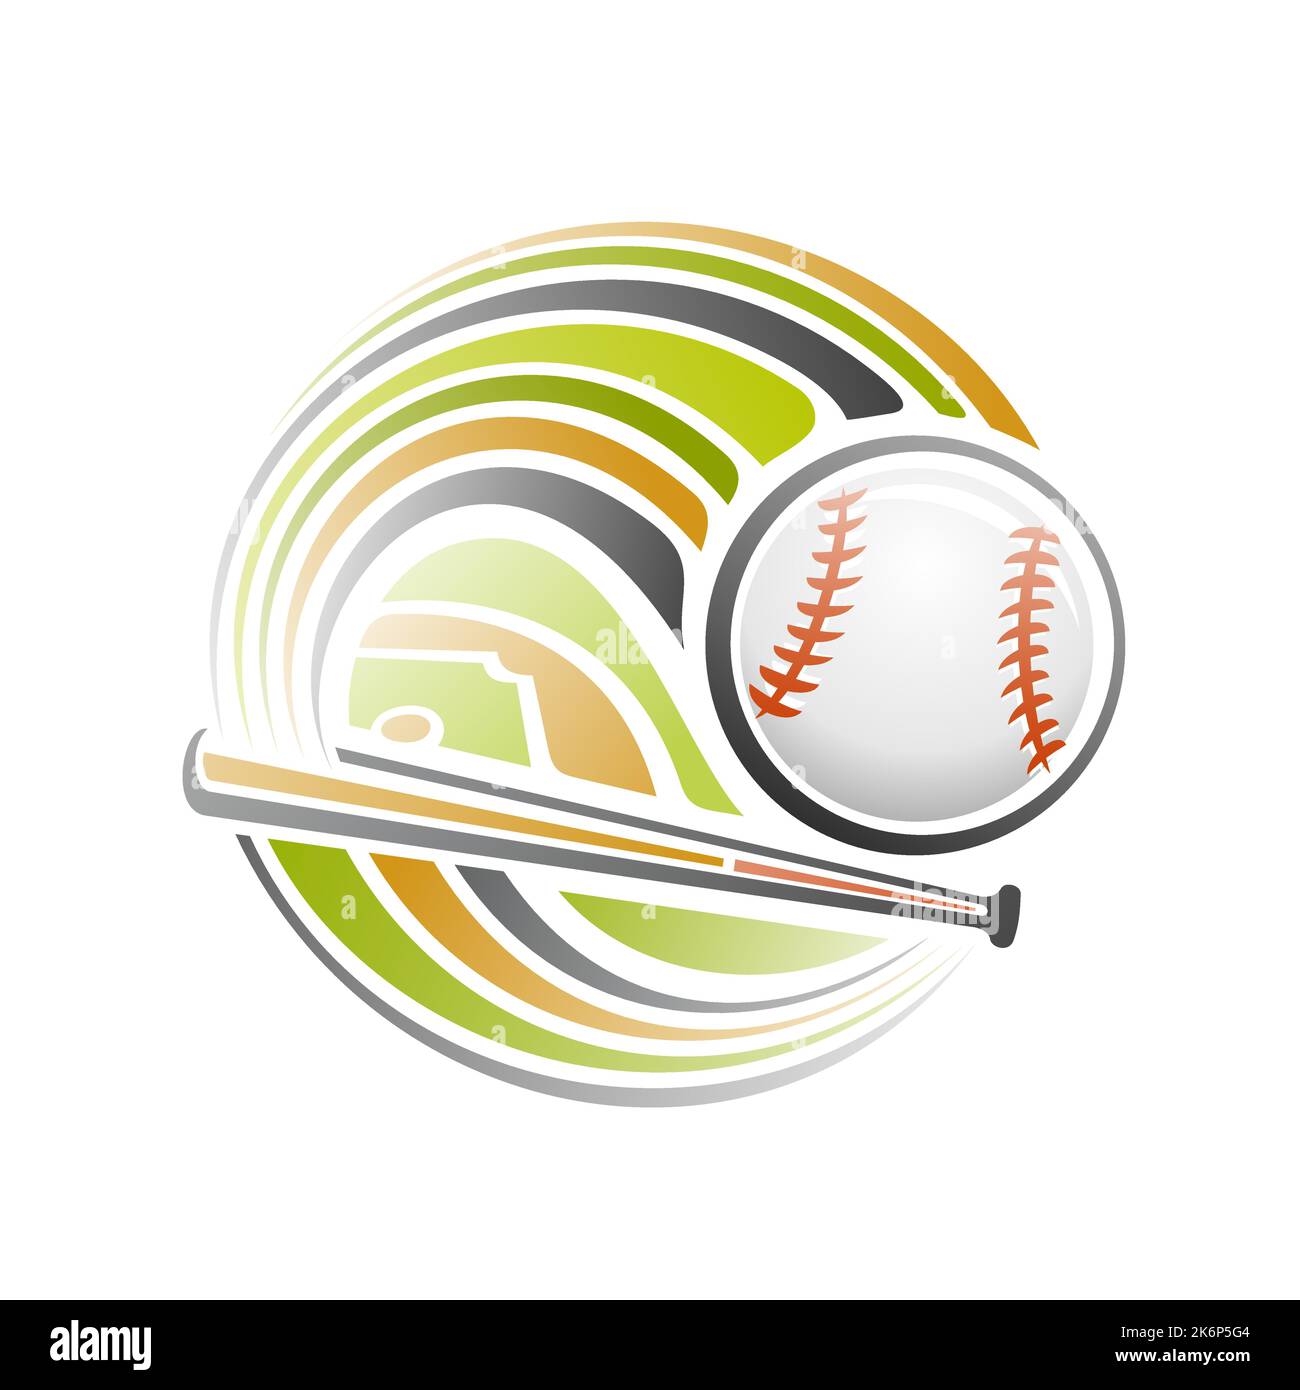 Vector logo for Baseball Sport, isolated modern emblem with illustration of flying baseball ball over playground, decorative line art sports badge for Stock Vector